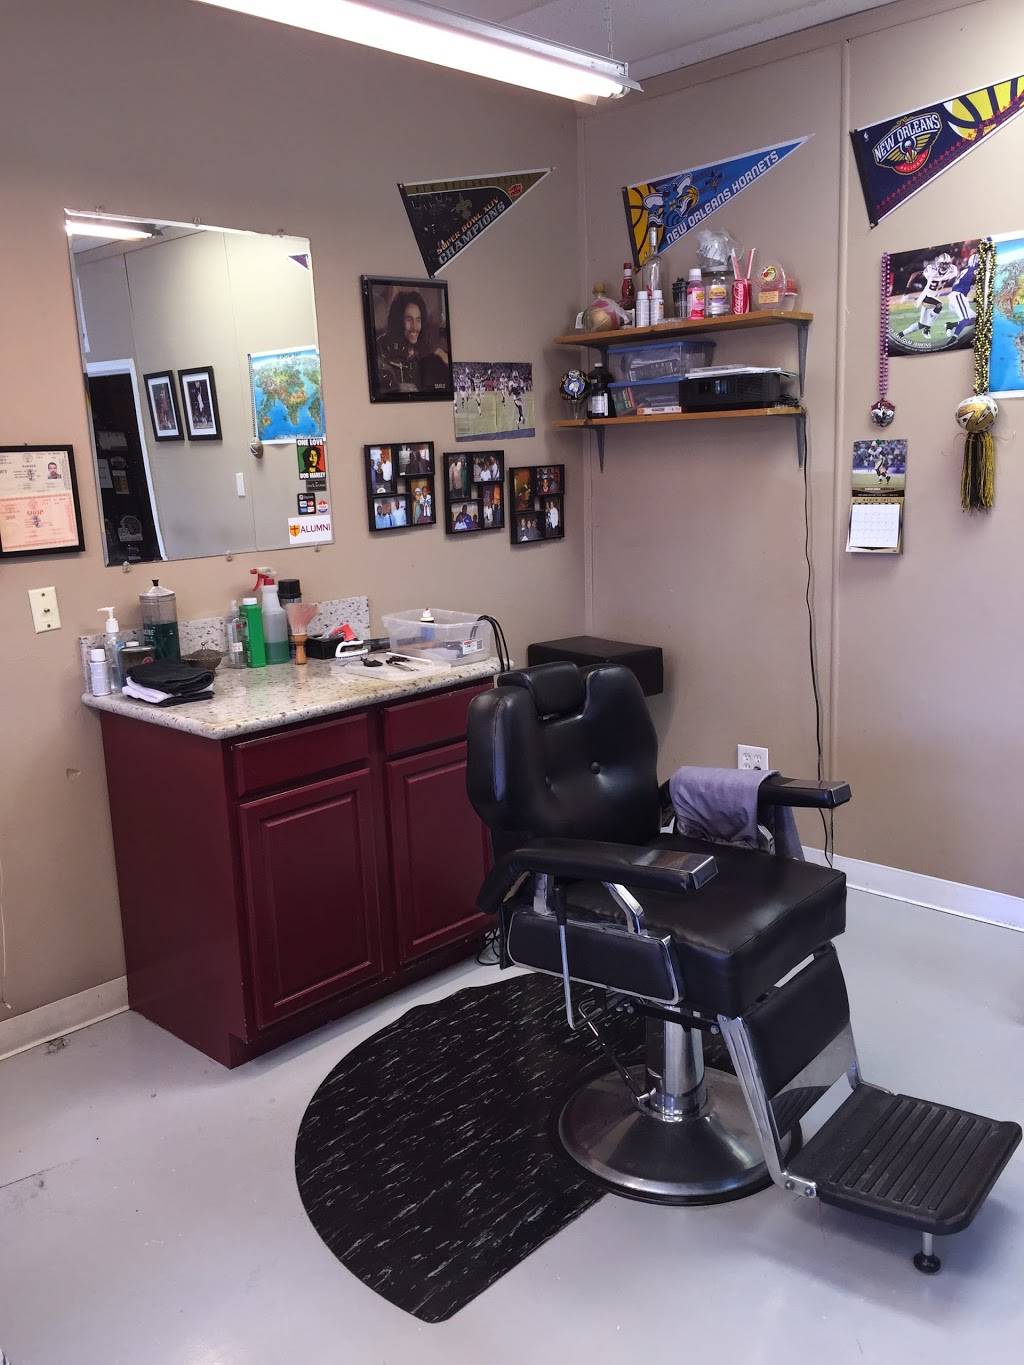 Cut Creators Barber Shop | 2012 Manhattan Blvd Suite 9, Harvey, LA 70058, USA | Phone: (504) 256-3207